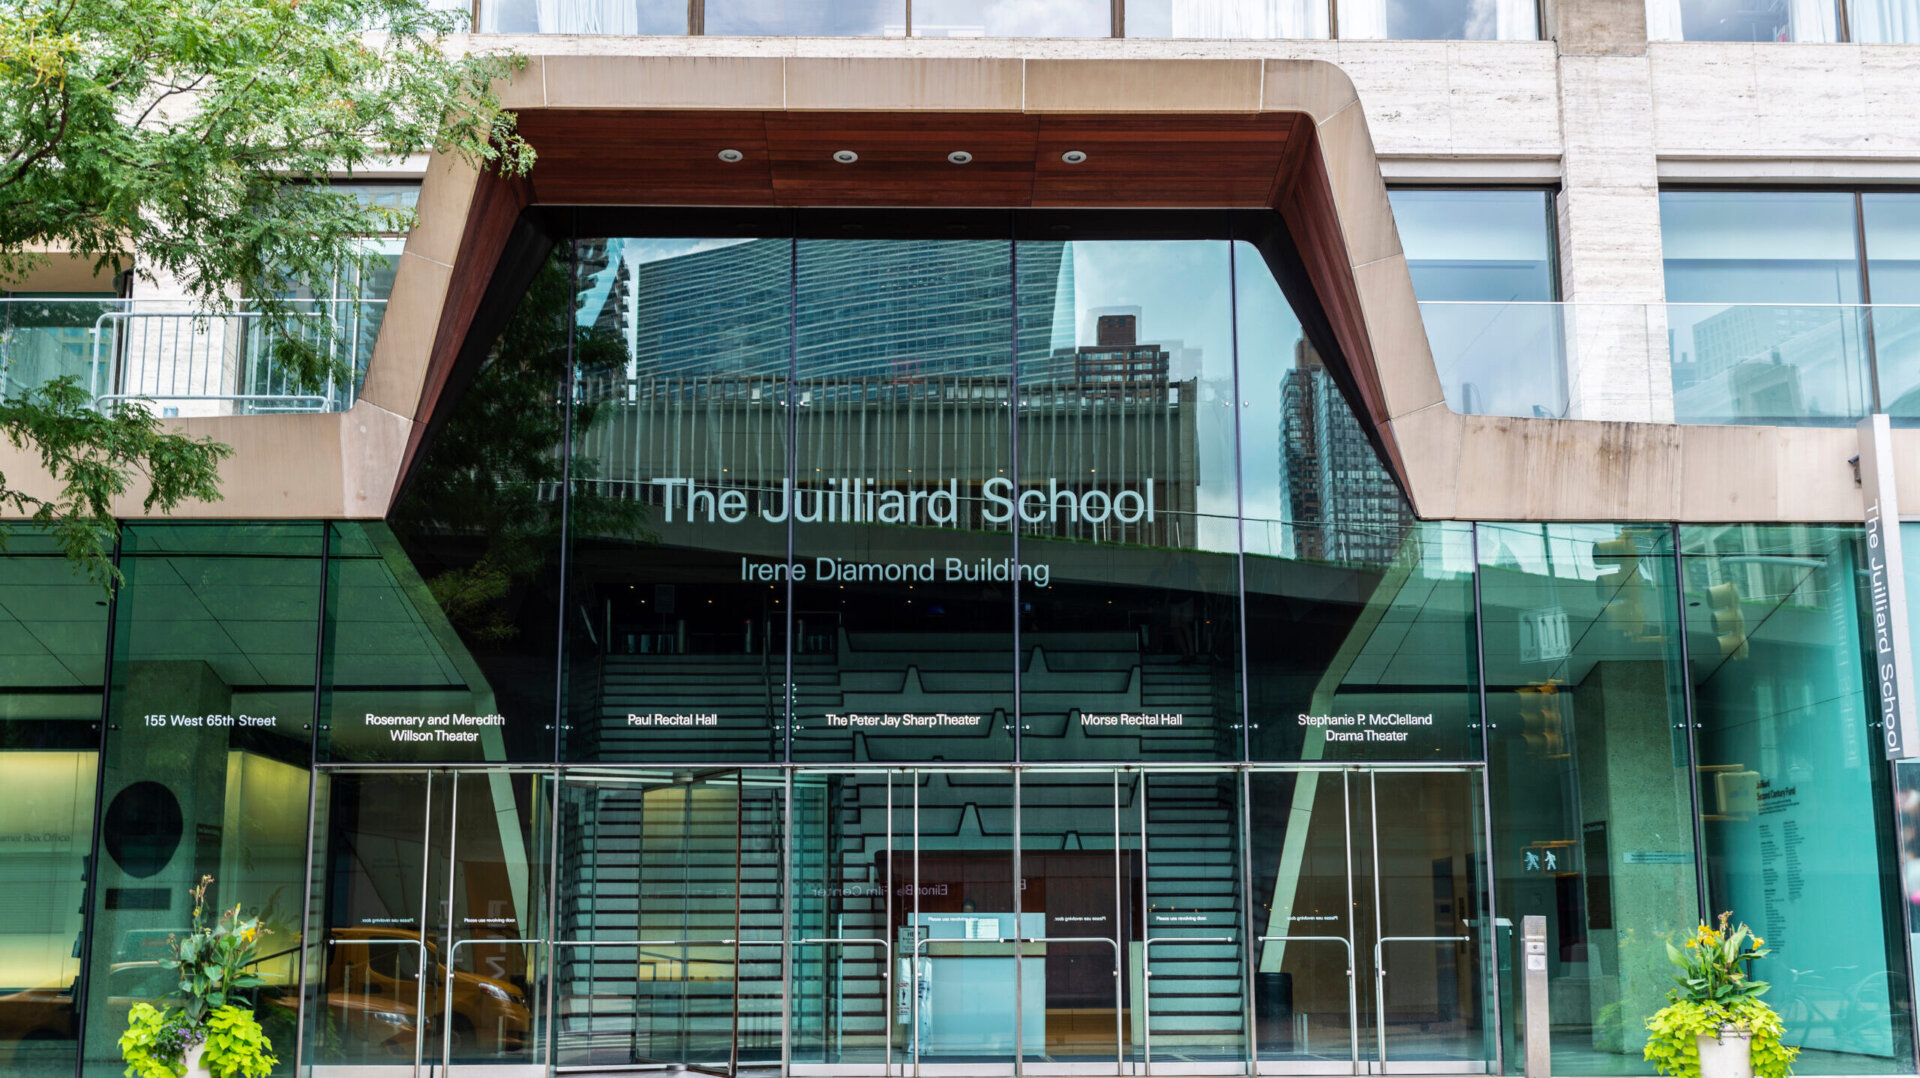 Entrance to the Juilliard School